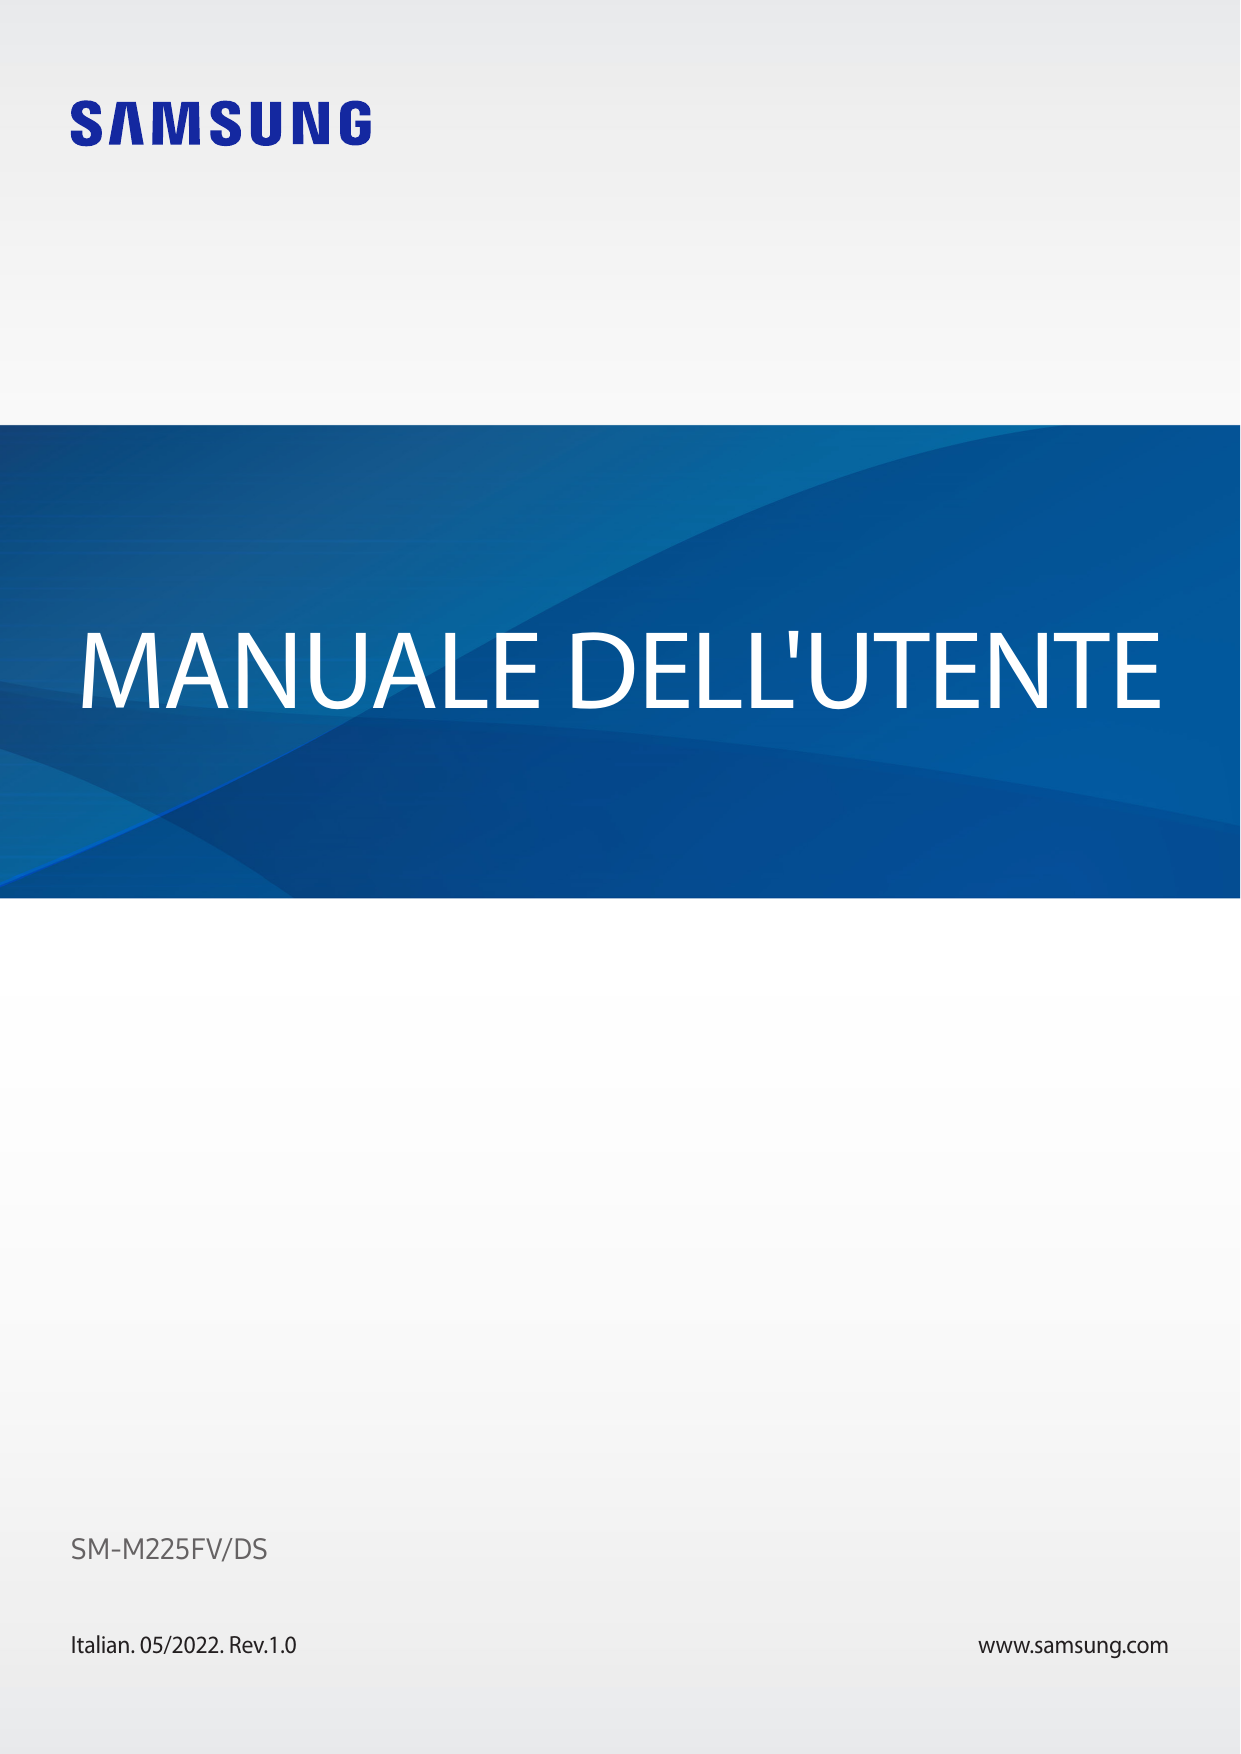 MANUALE DELL'UTENTESM-M225FV/DSItalian. 05/2022. Rev.1.0www.samsung.com